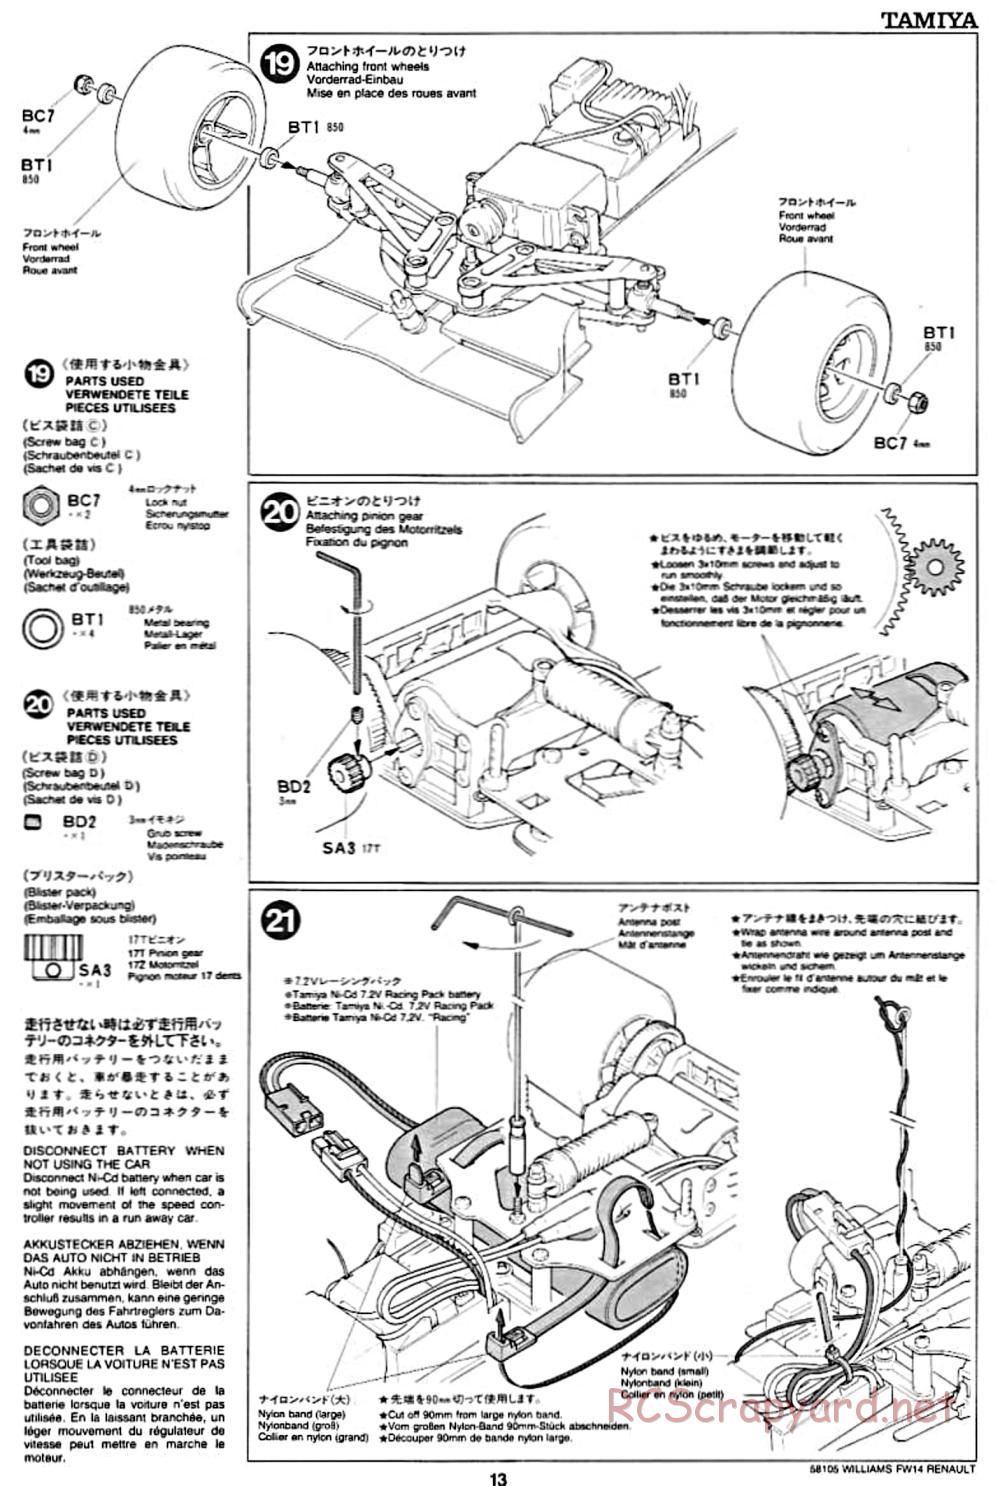 Tamiya - Williams FW14 Renault - F102 Chassis - Manual - Page 13